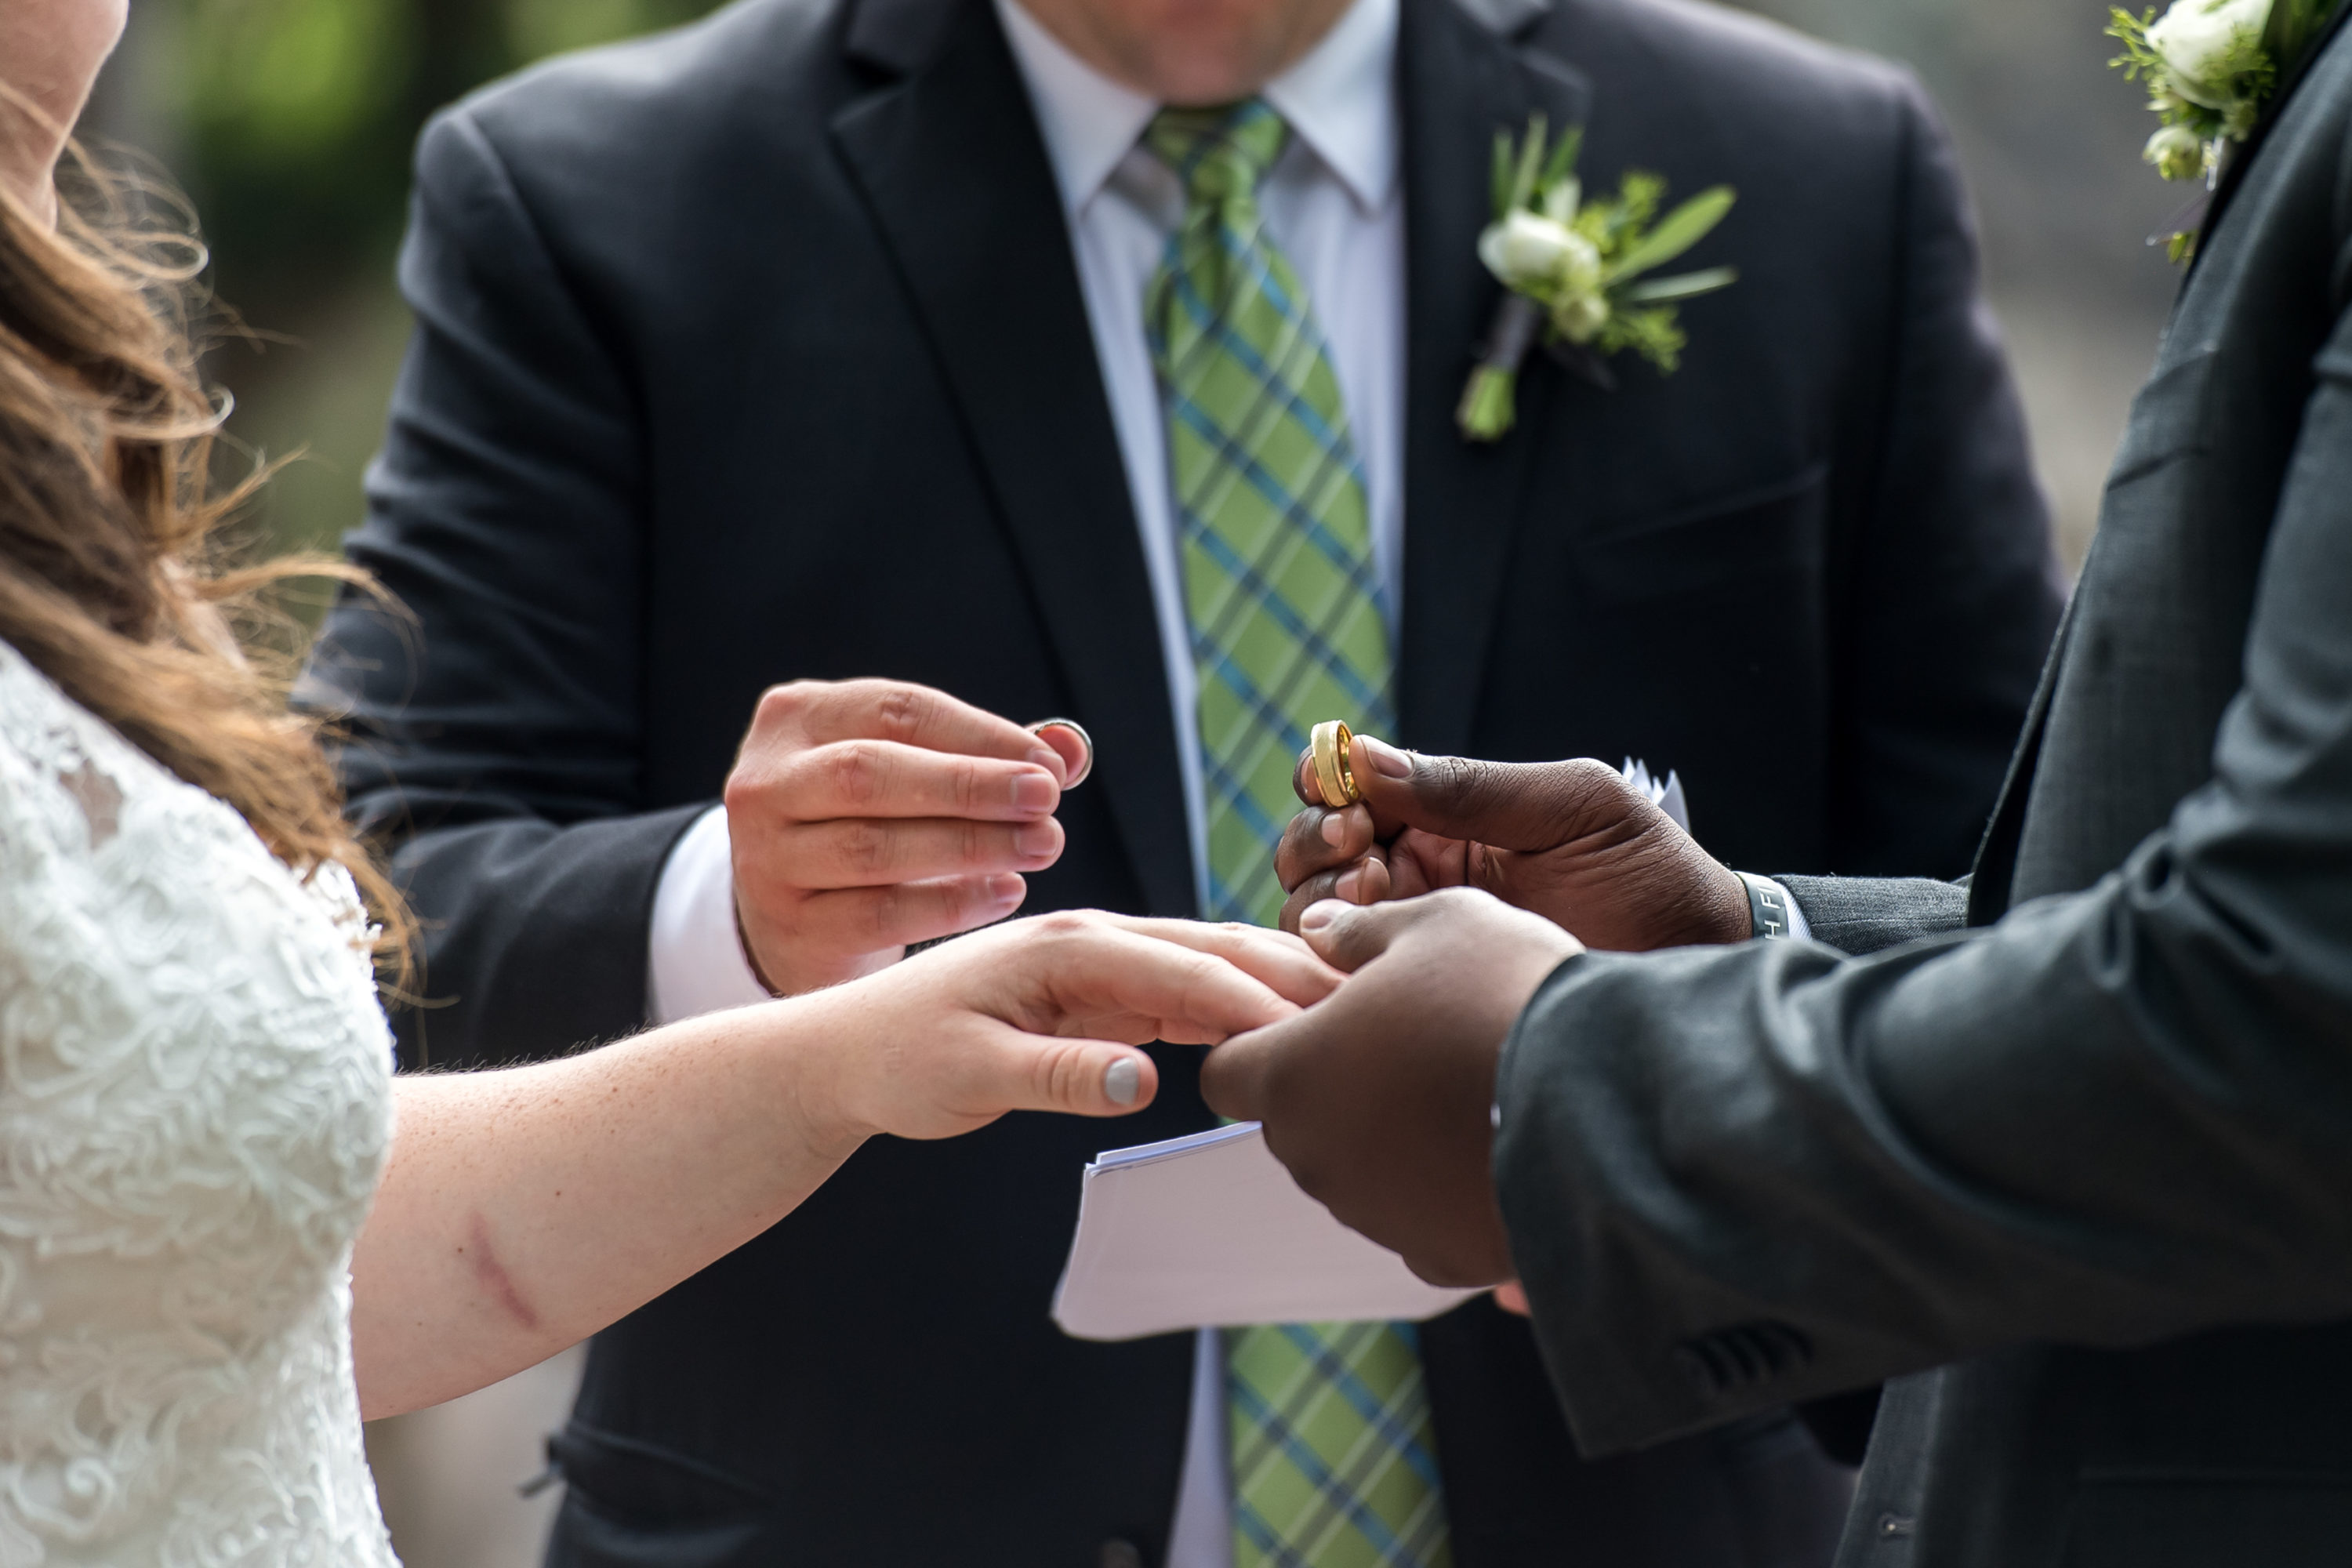 Handling of the rings during a Greenbriar Inn wedding in Boulder, Colorado.